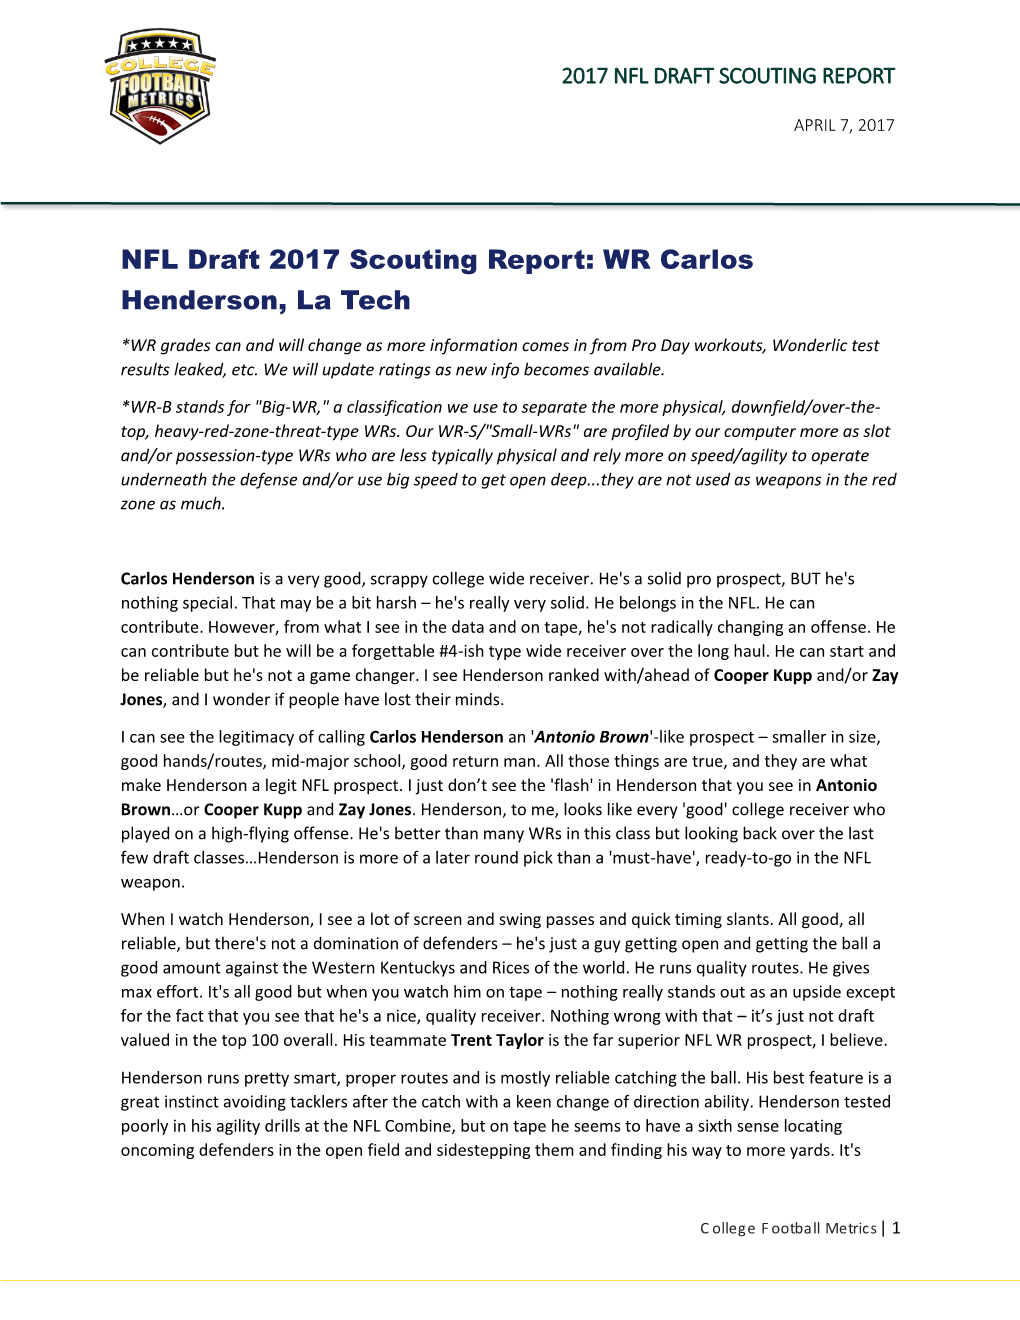 NFL Draft 2017 Scouting Report: WR Carlos Henderson, La Tech